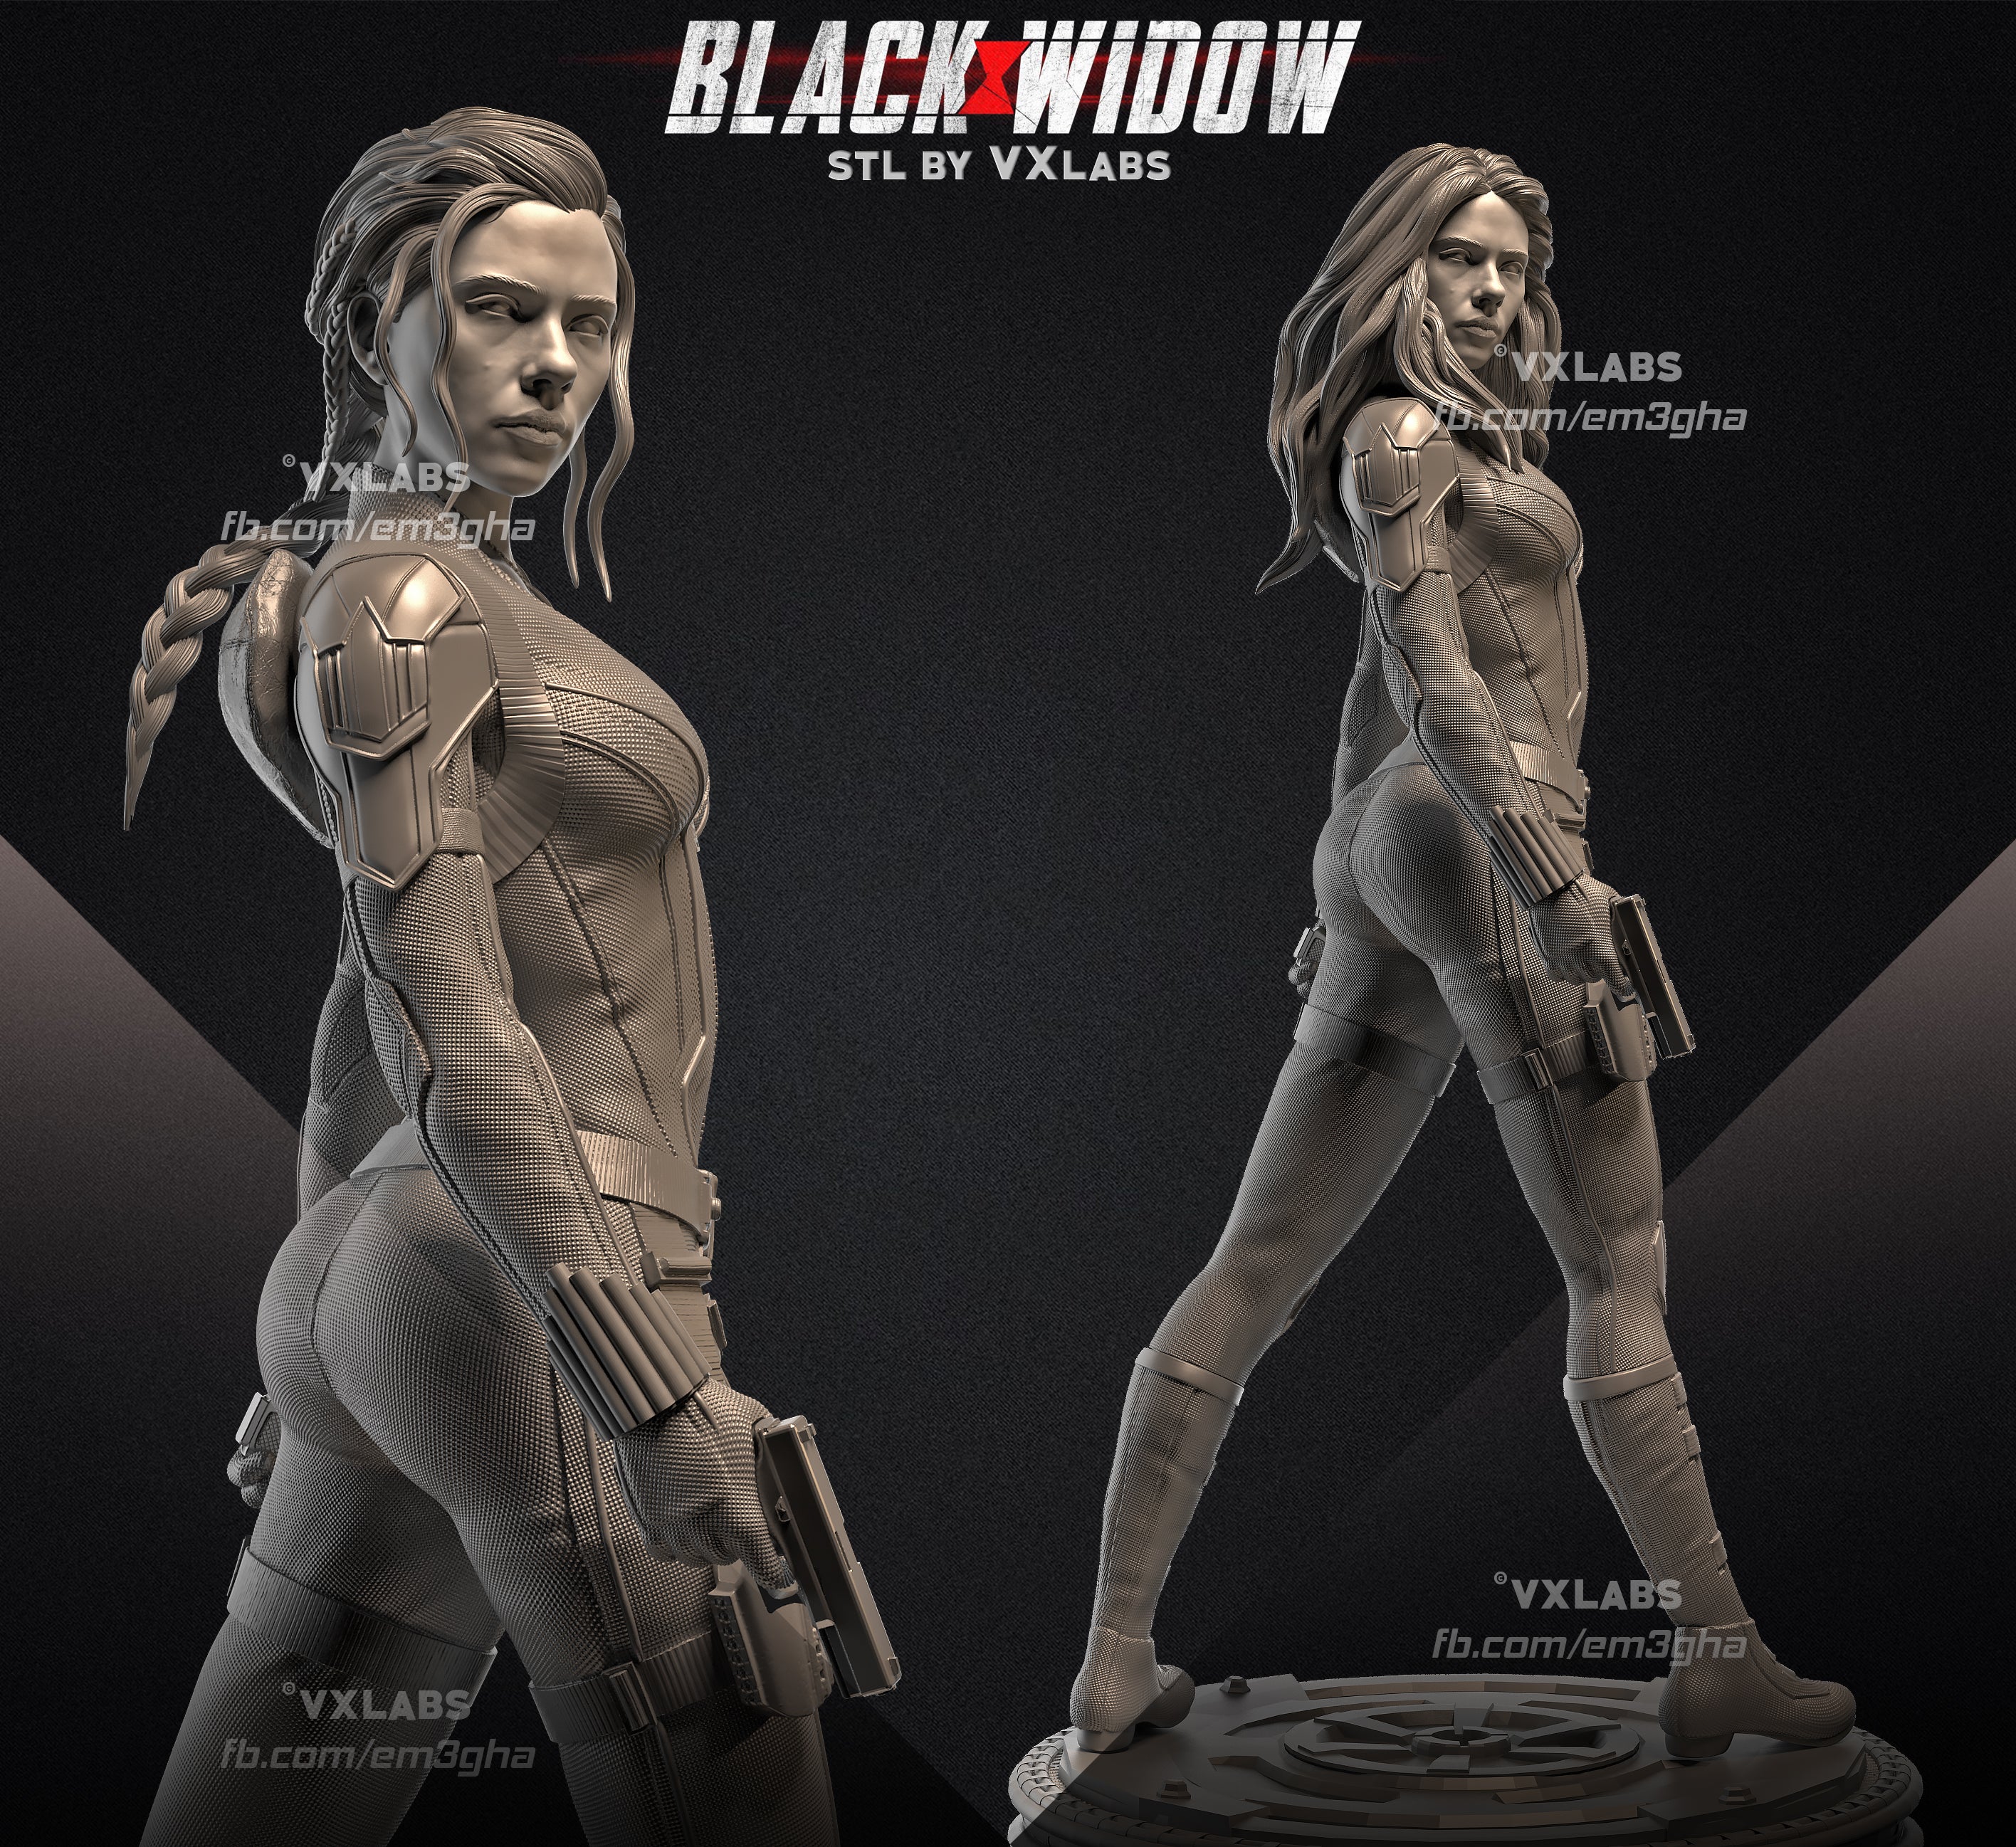 Black Widow 2021